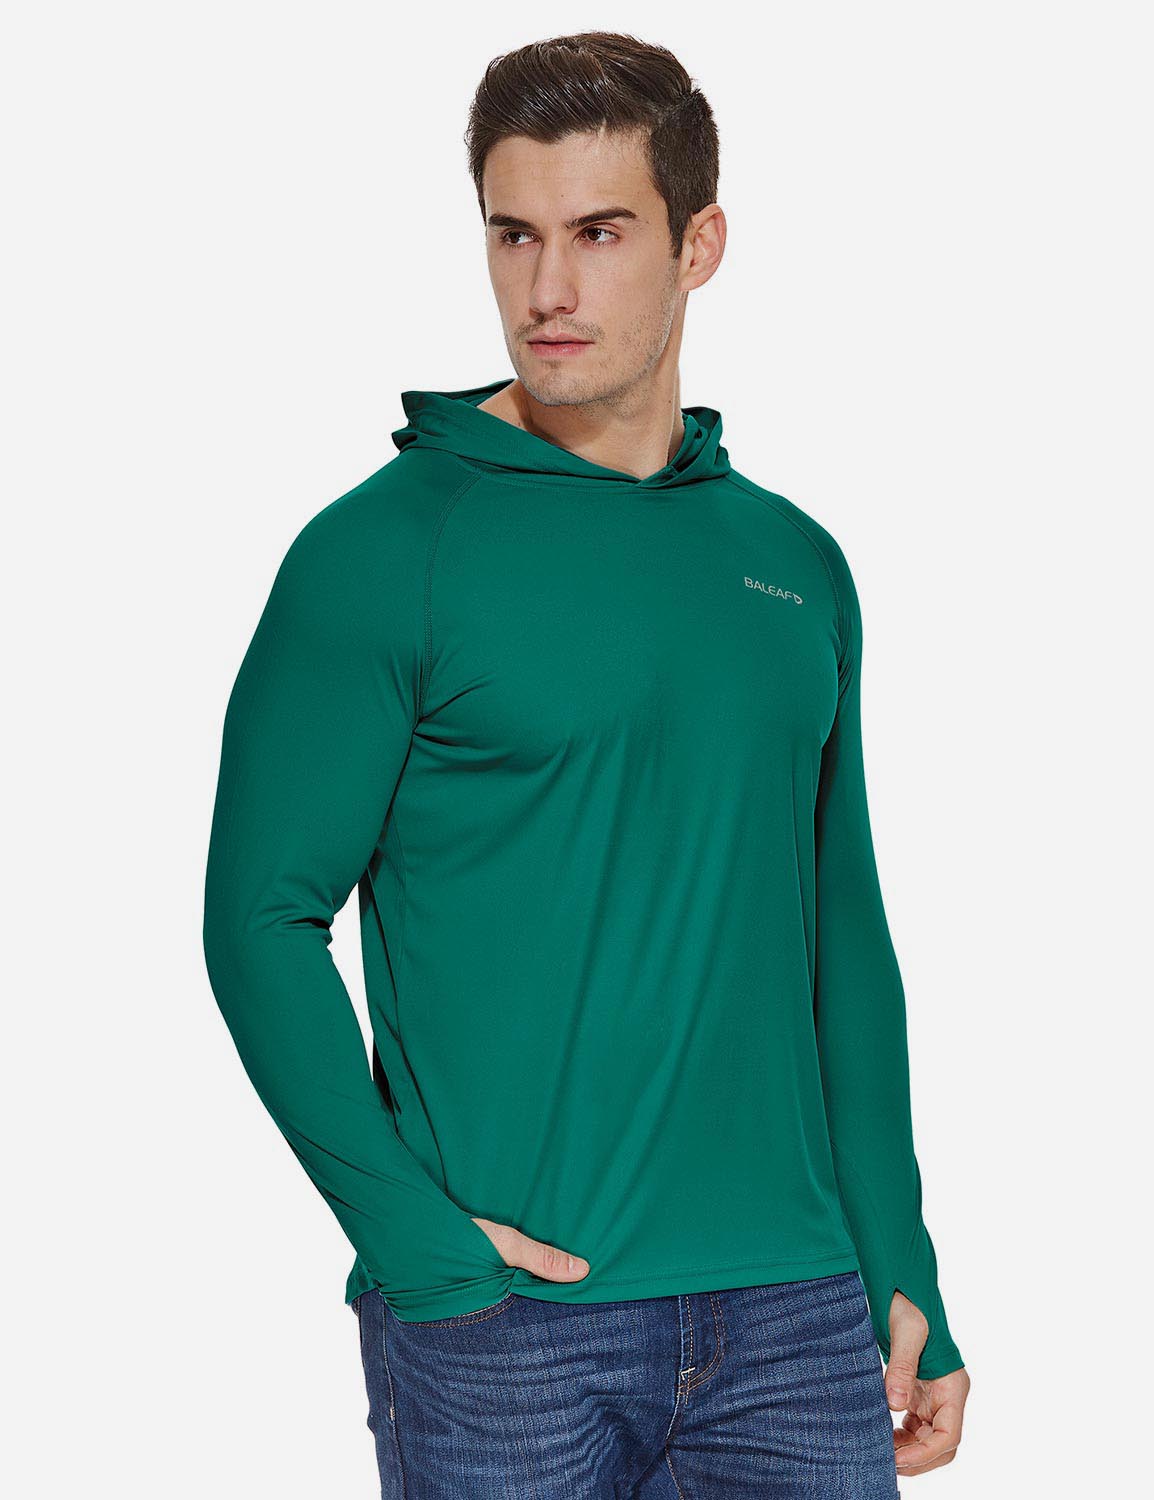 Baleaf Men's UPF50+ Hooded & Thumbhole Comfort Fit Long Sleeved Shirt aga030 Emerald Side